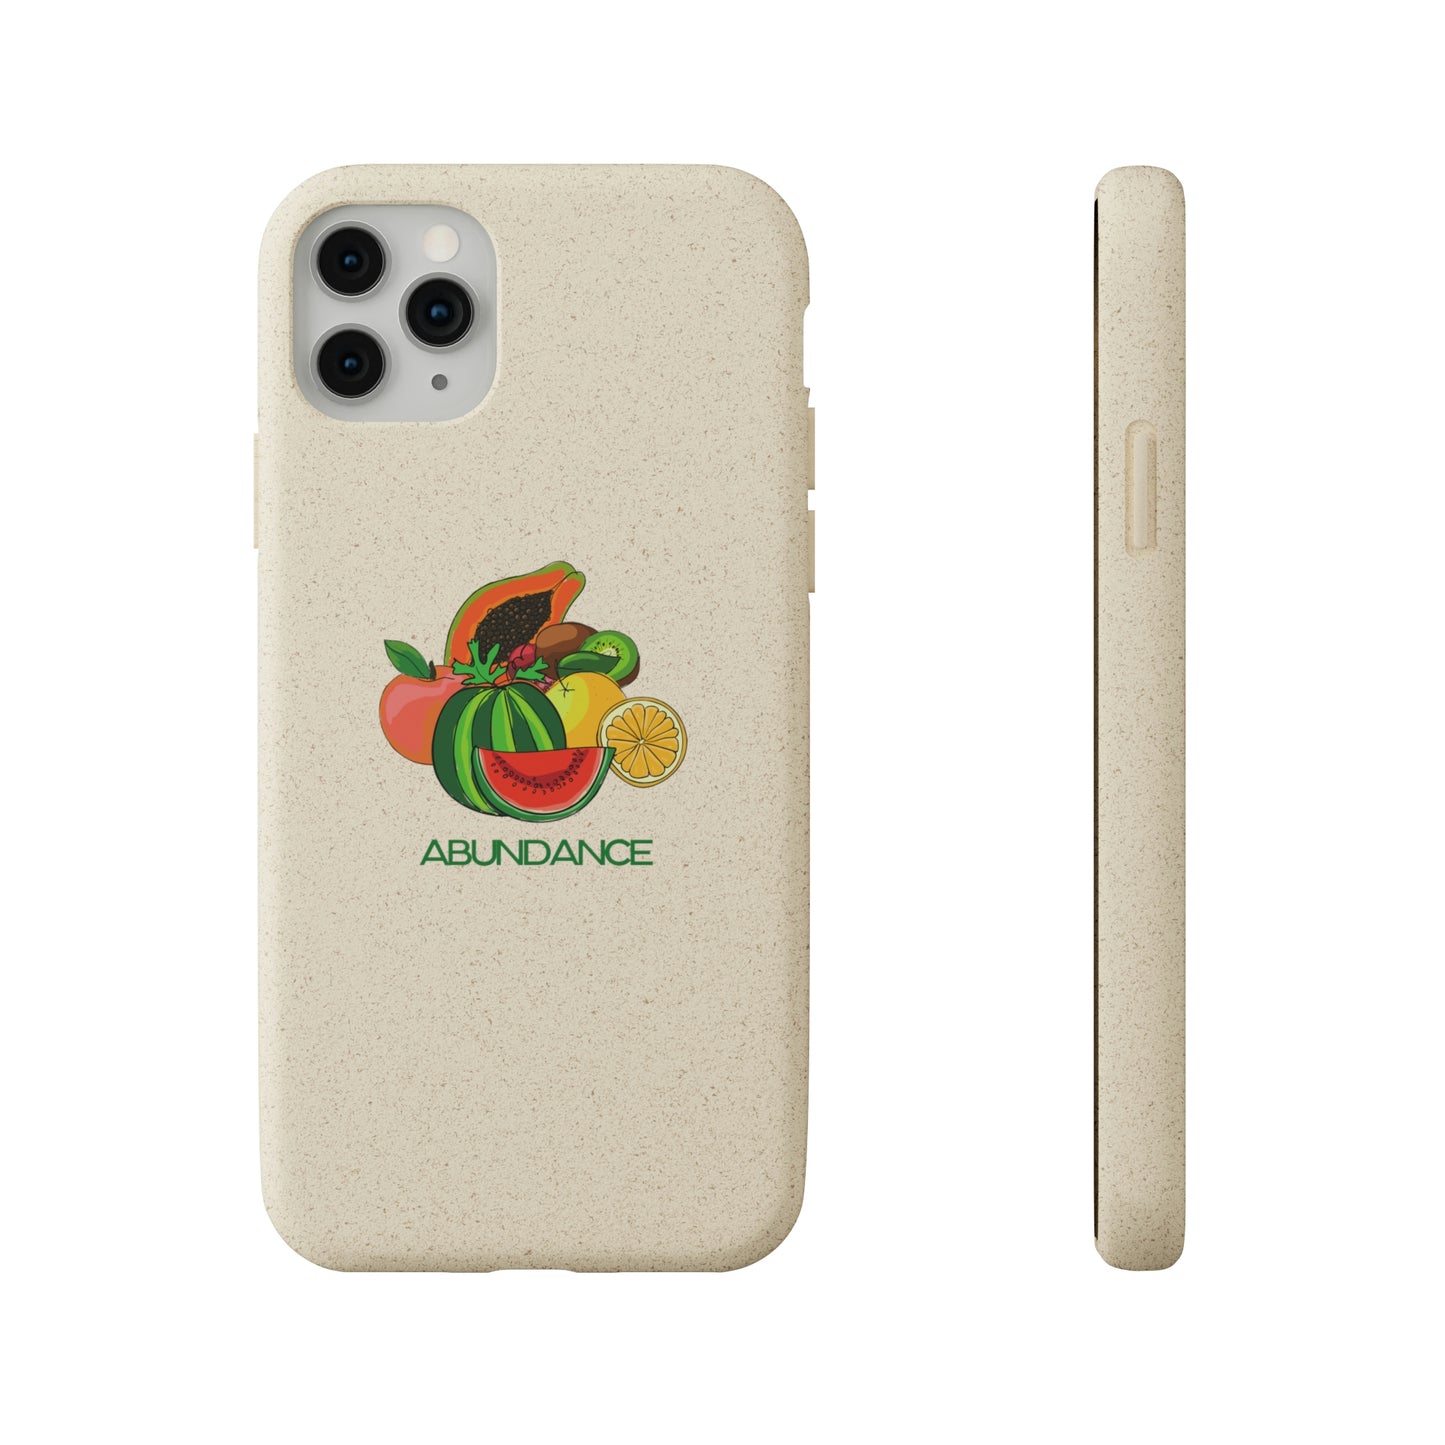 Biodegradable iPhone Cases - ABUNDANCE